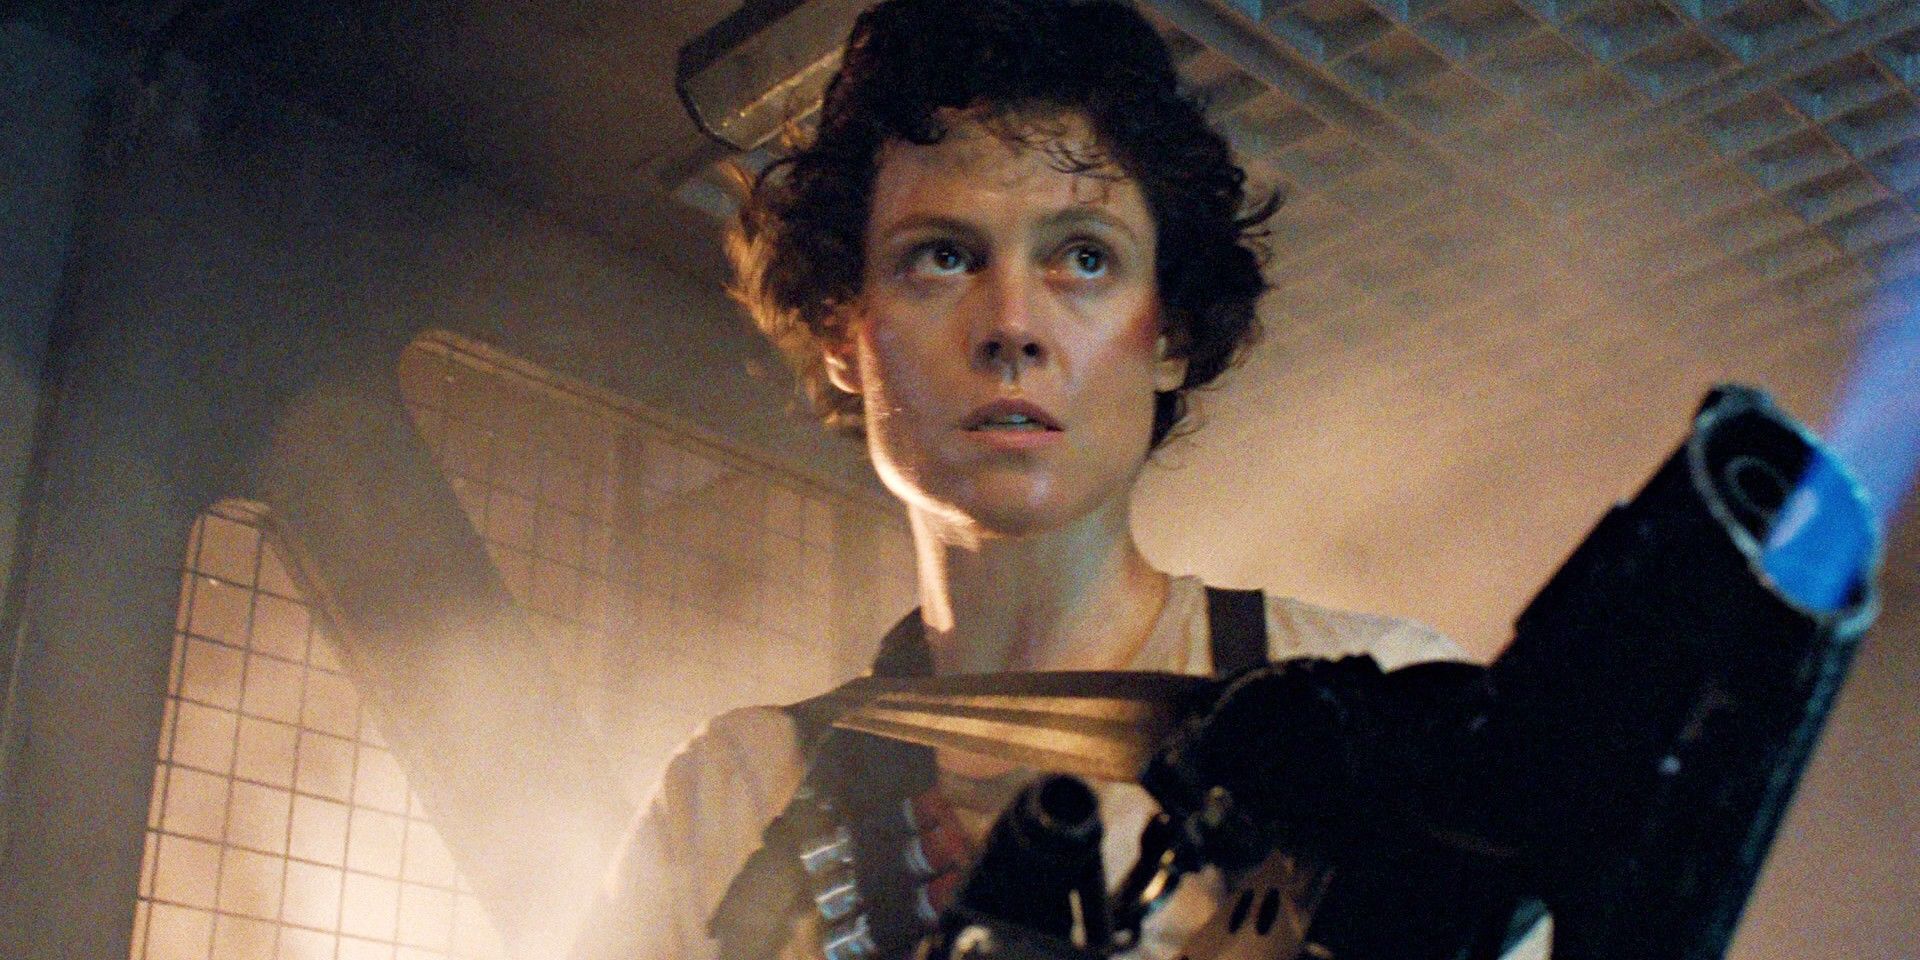 Sigourney Weaver, as Ripley, prepares to attack in Aliens (1986).